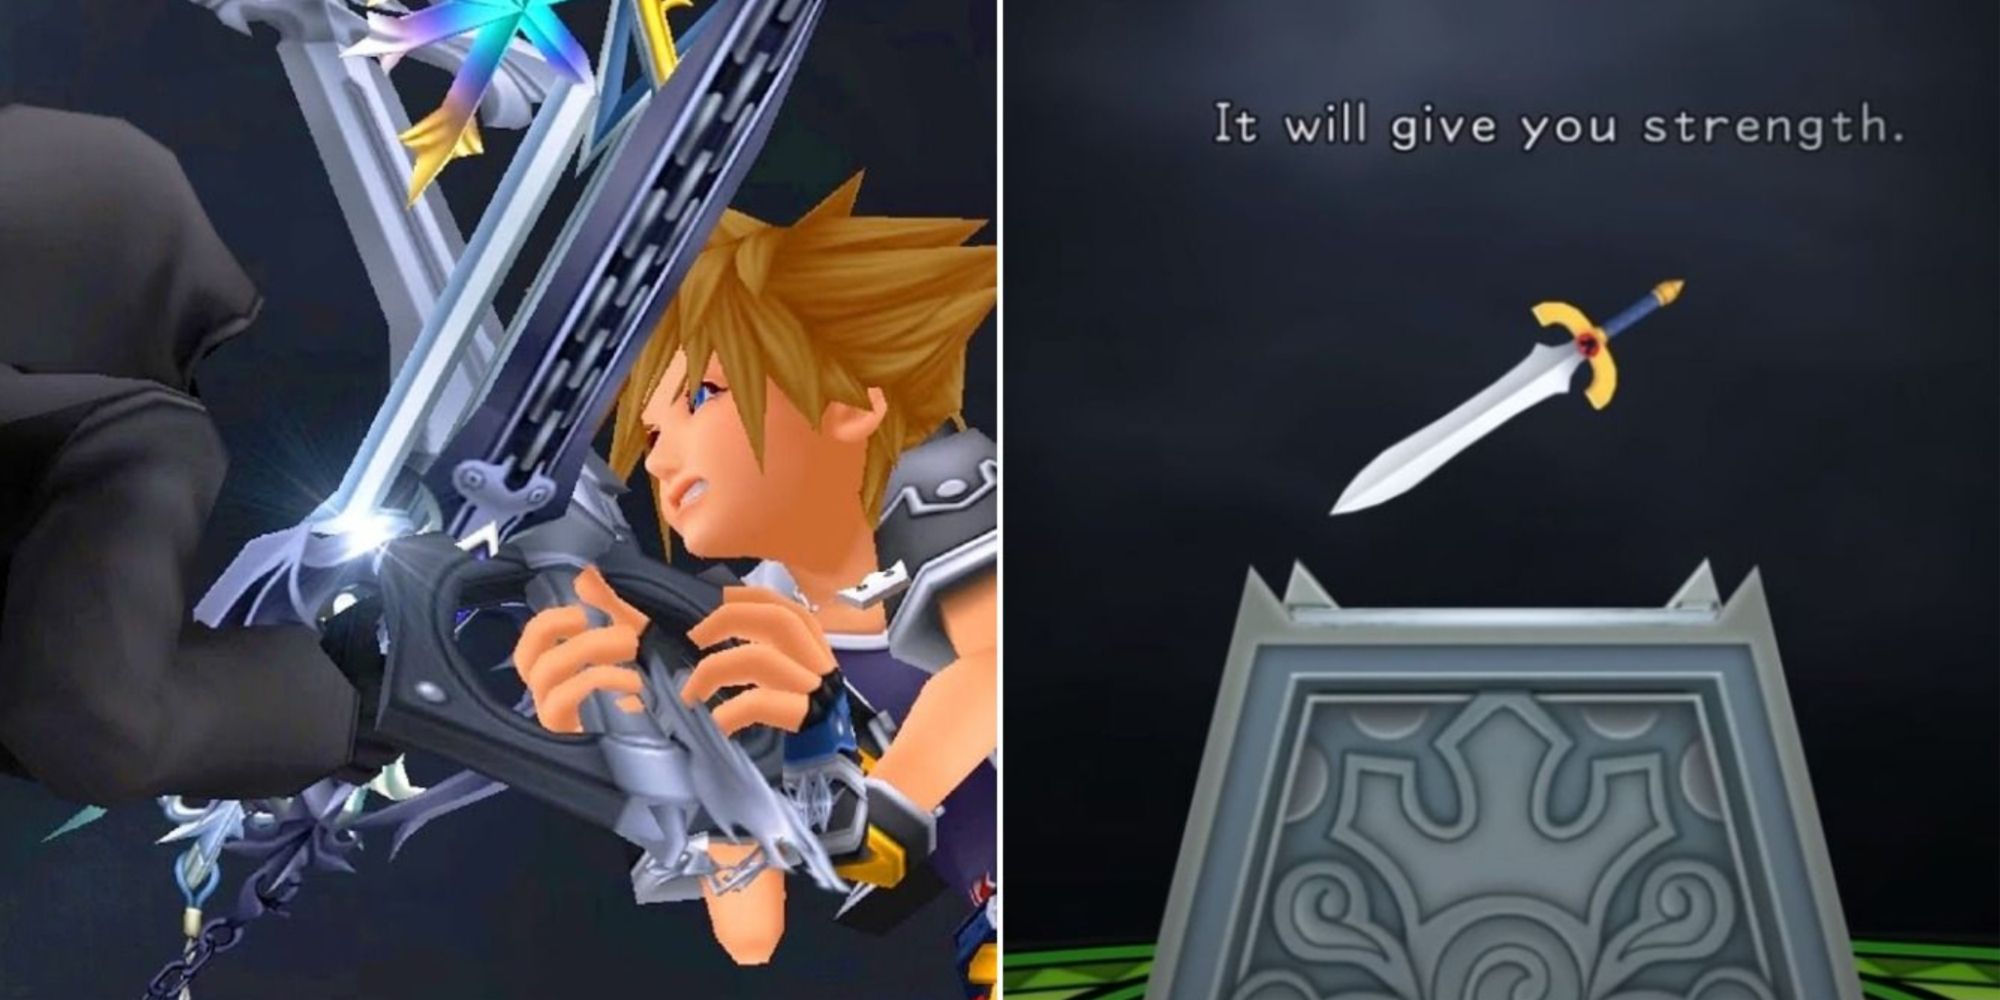 Kingdom Hearts Sora fighting an organisation member, and the sword pedestal